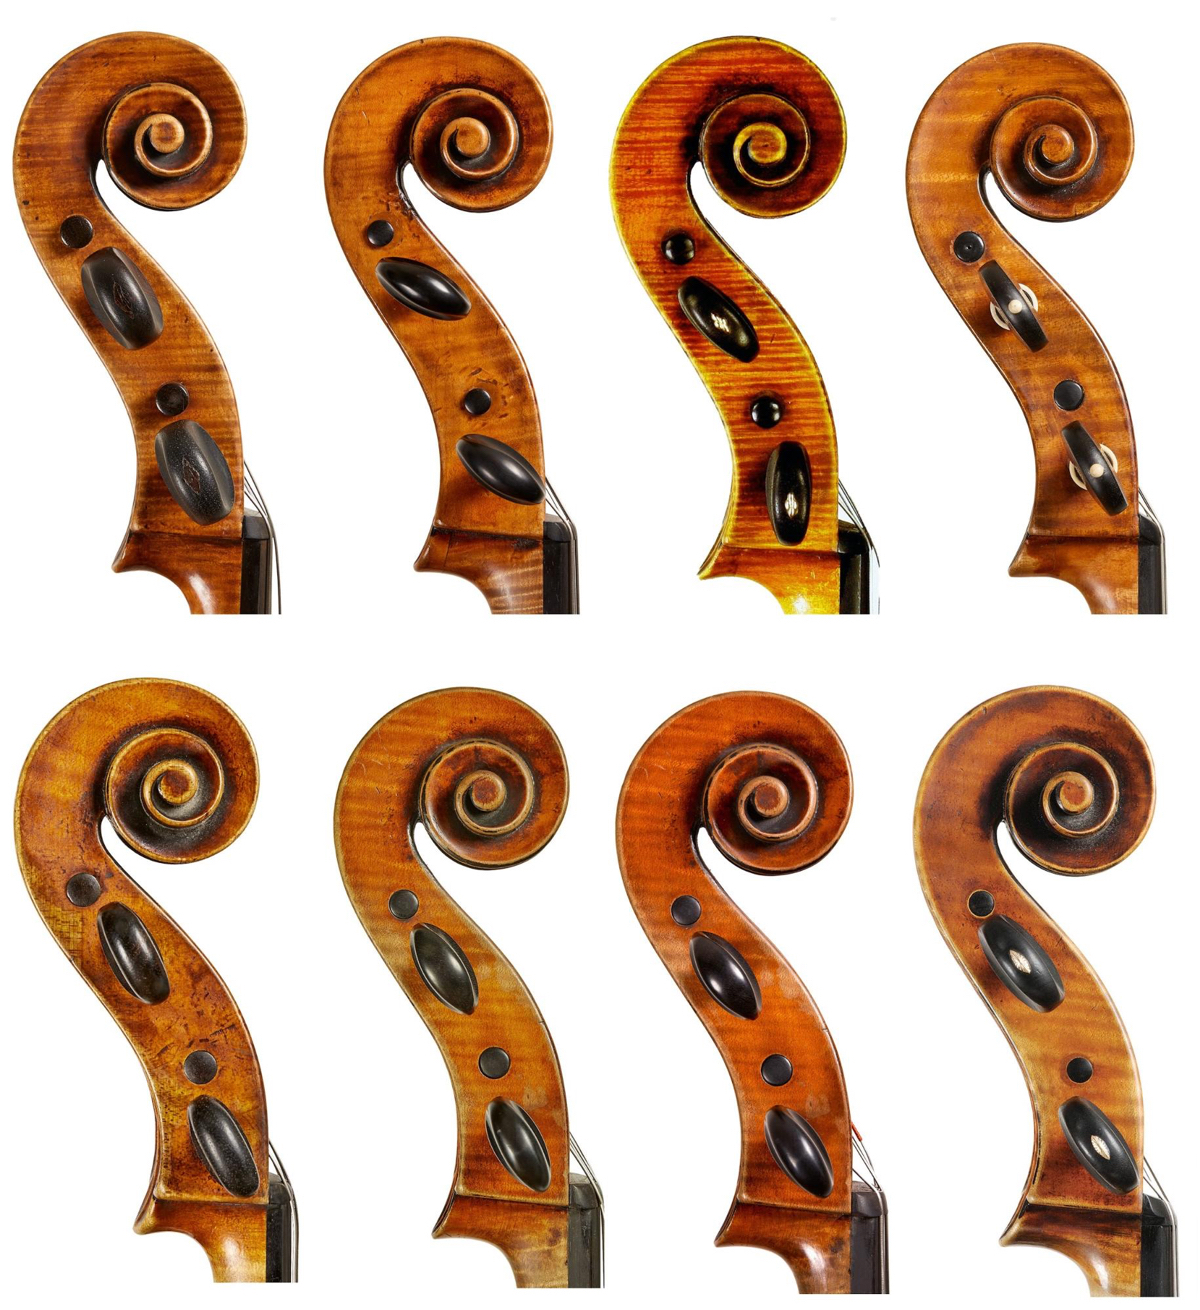 Vuillaume's cello heads